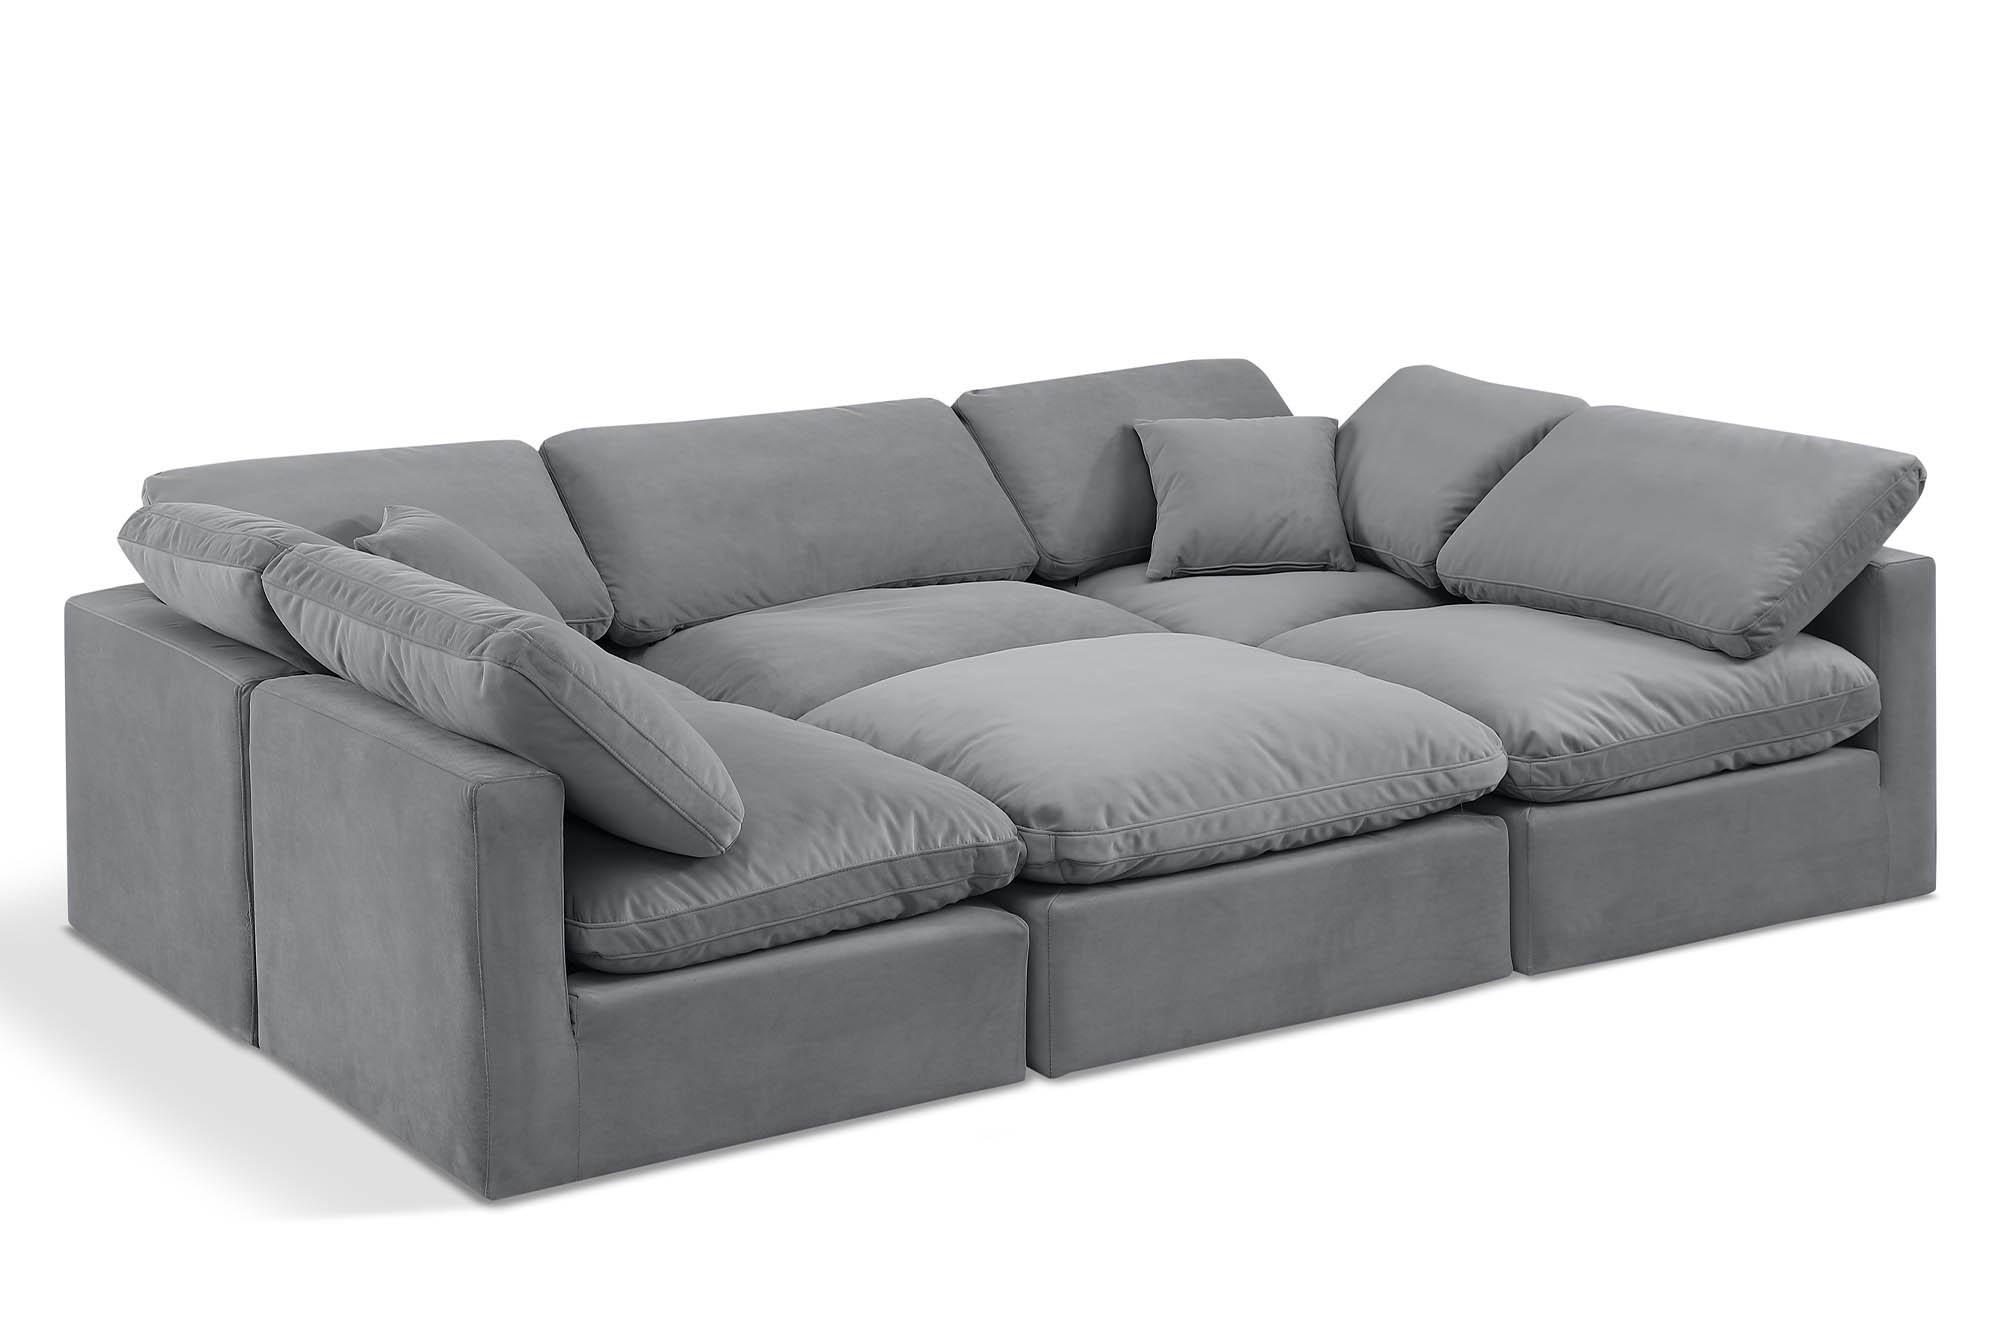 Contemporary, Modern Modular Sectional Sofa INDULGE 147Grey-Sec6C 147Grey-Sec6C in Gray Velvet